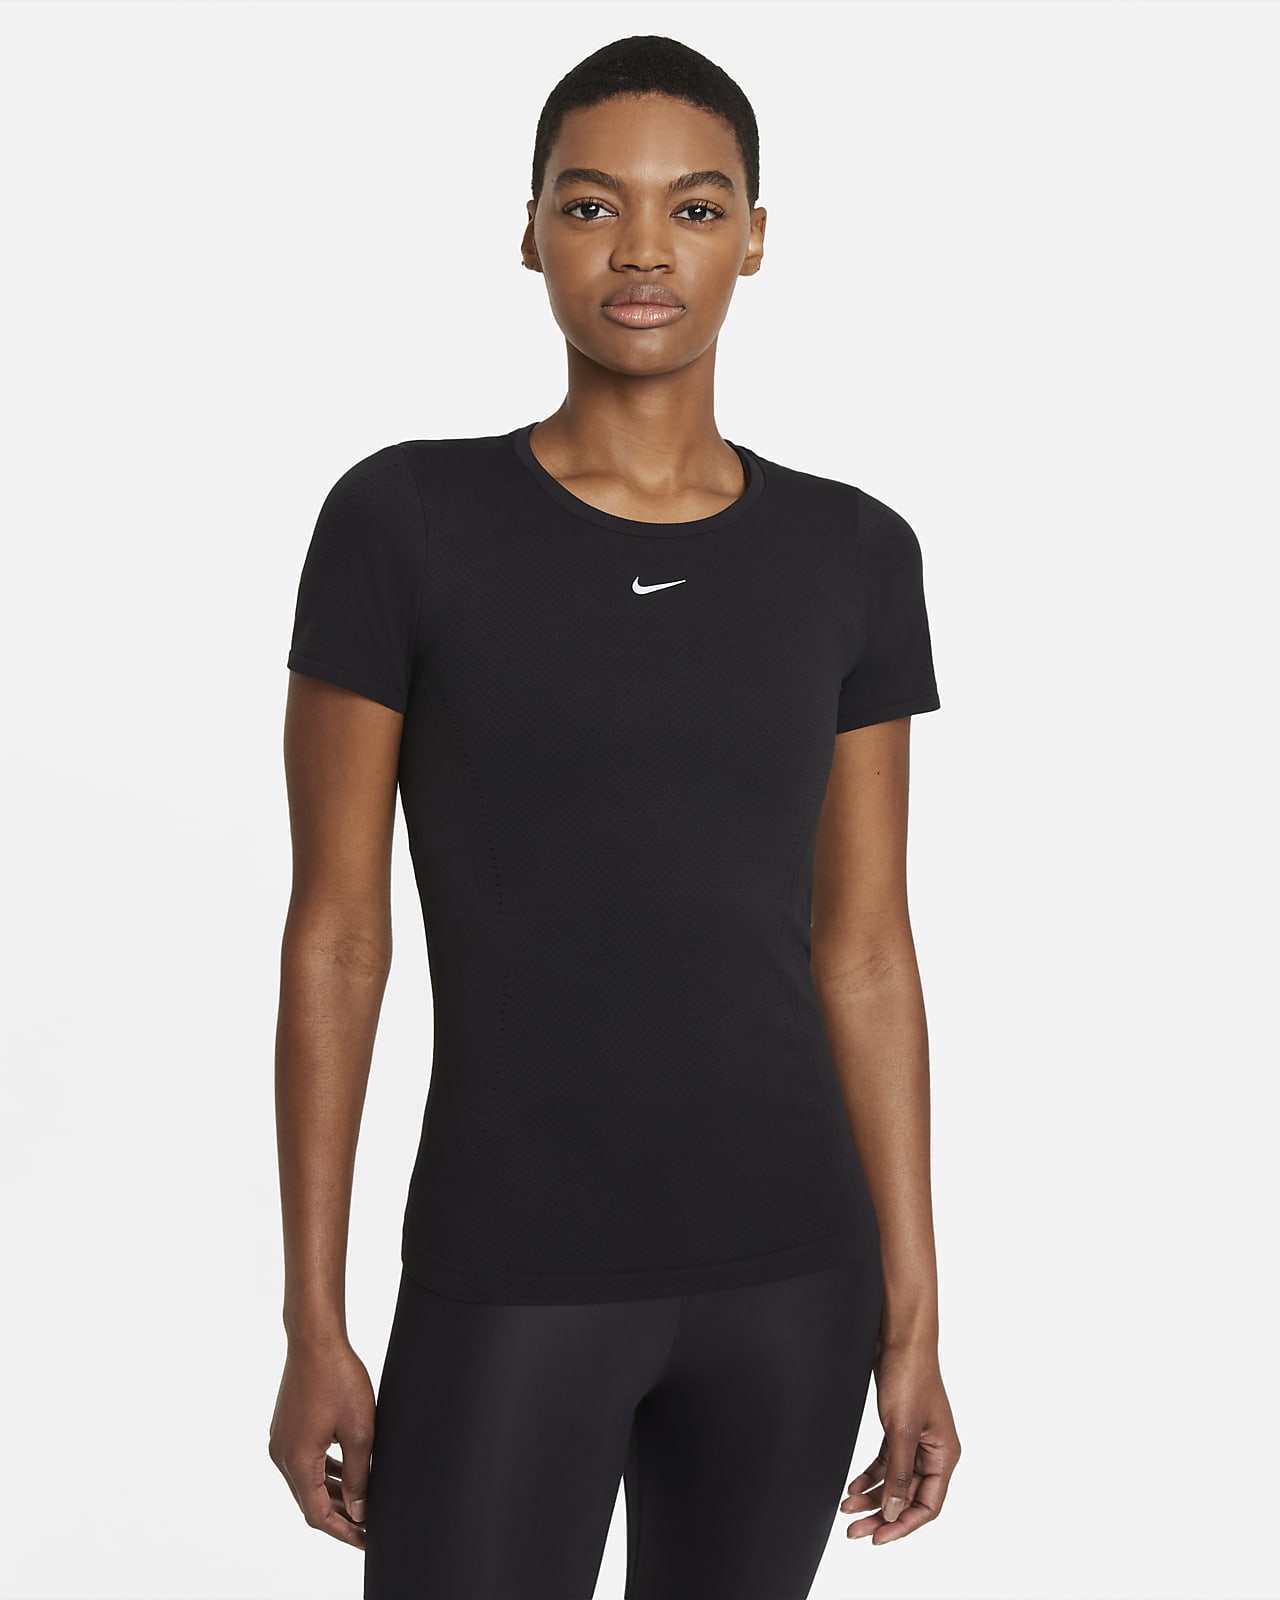 Nike T-shirt Manches Courtes Trend Femme Noir- JD Sports France